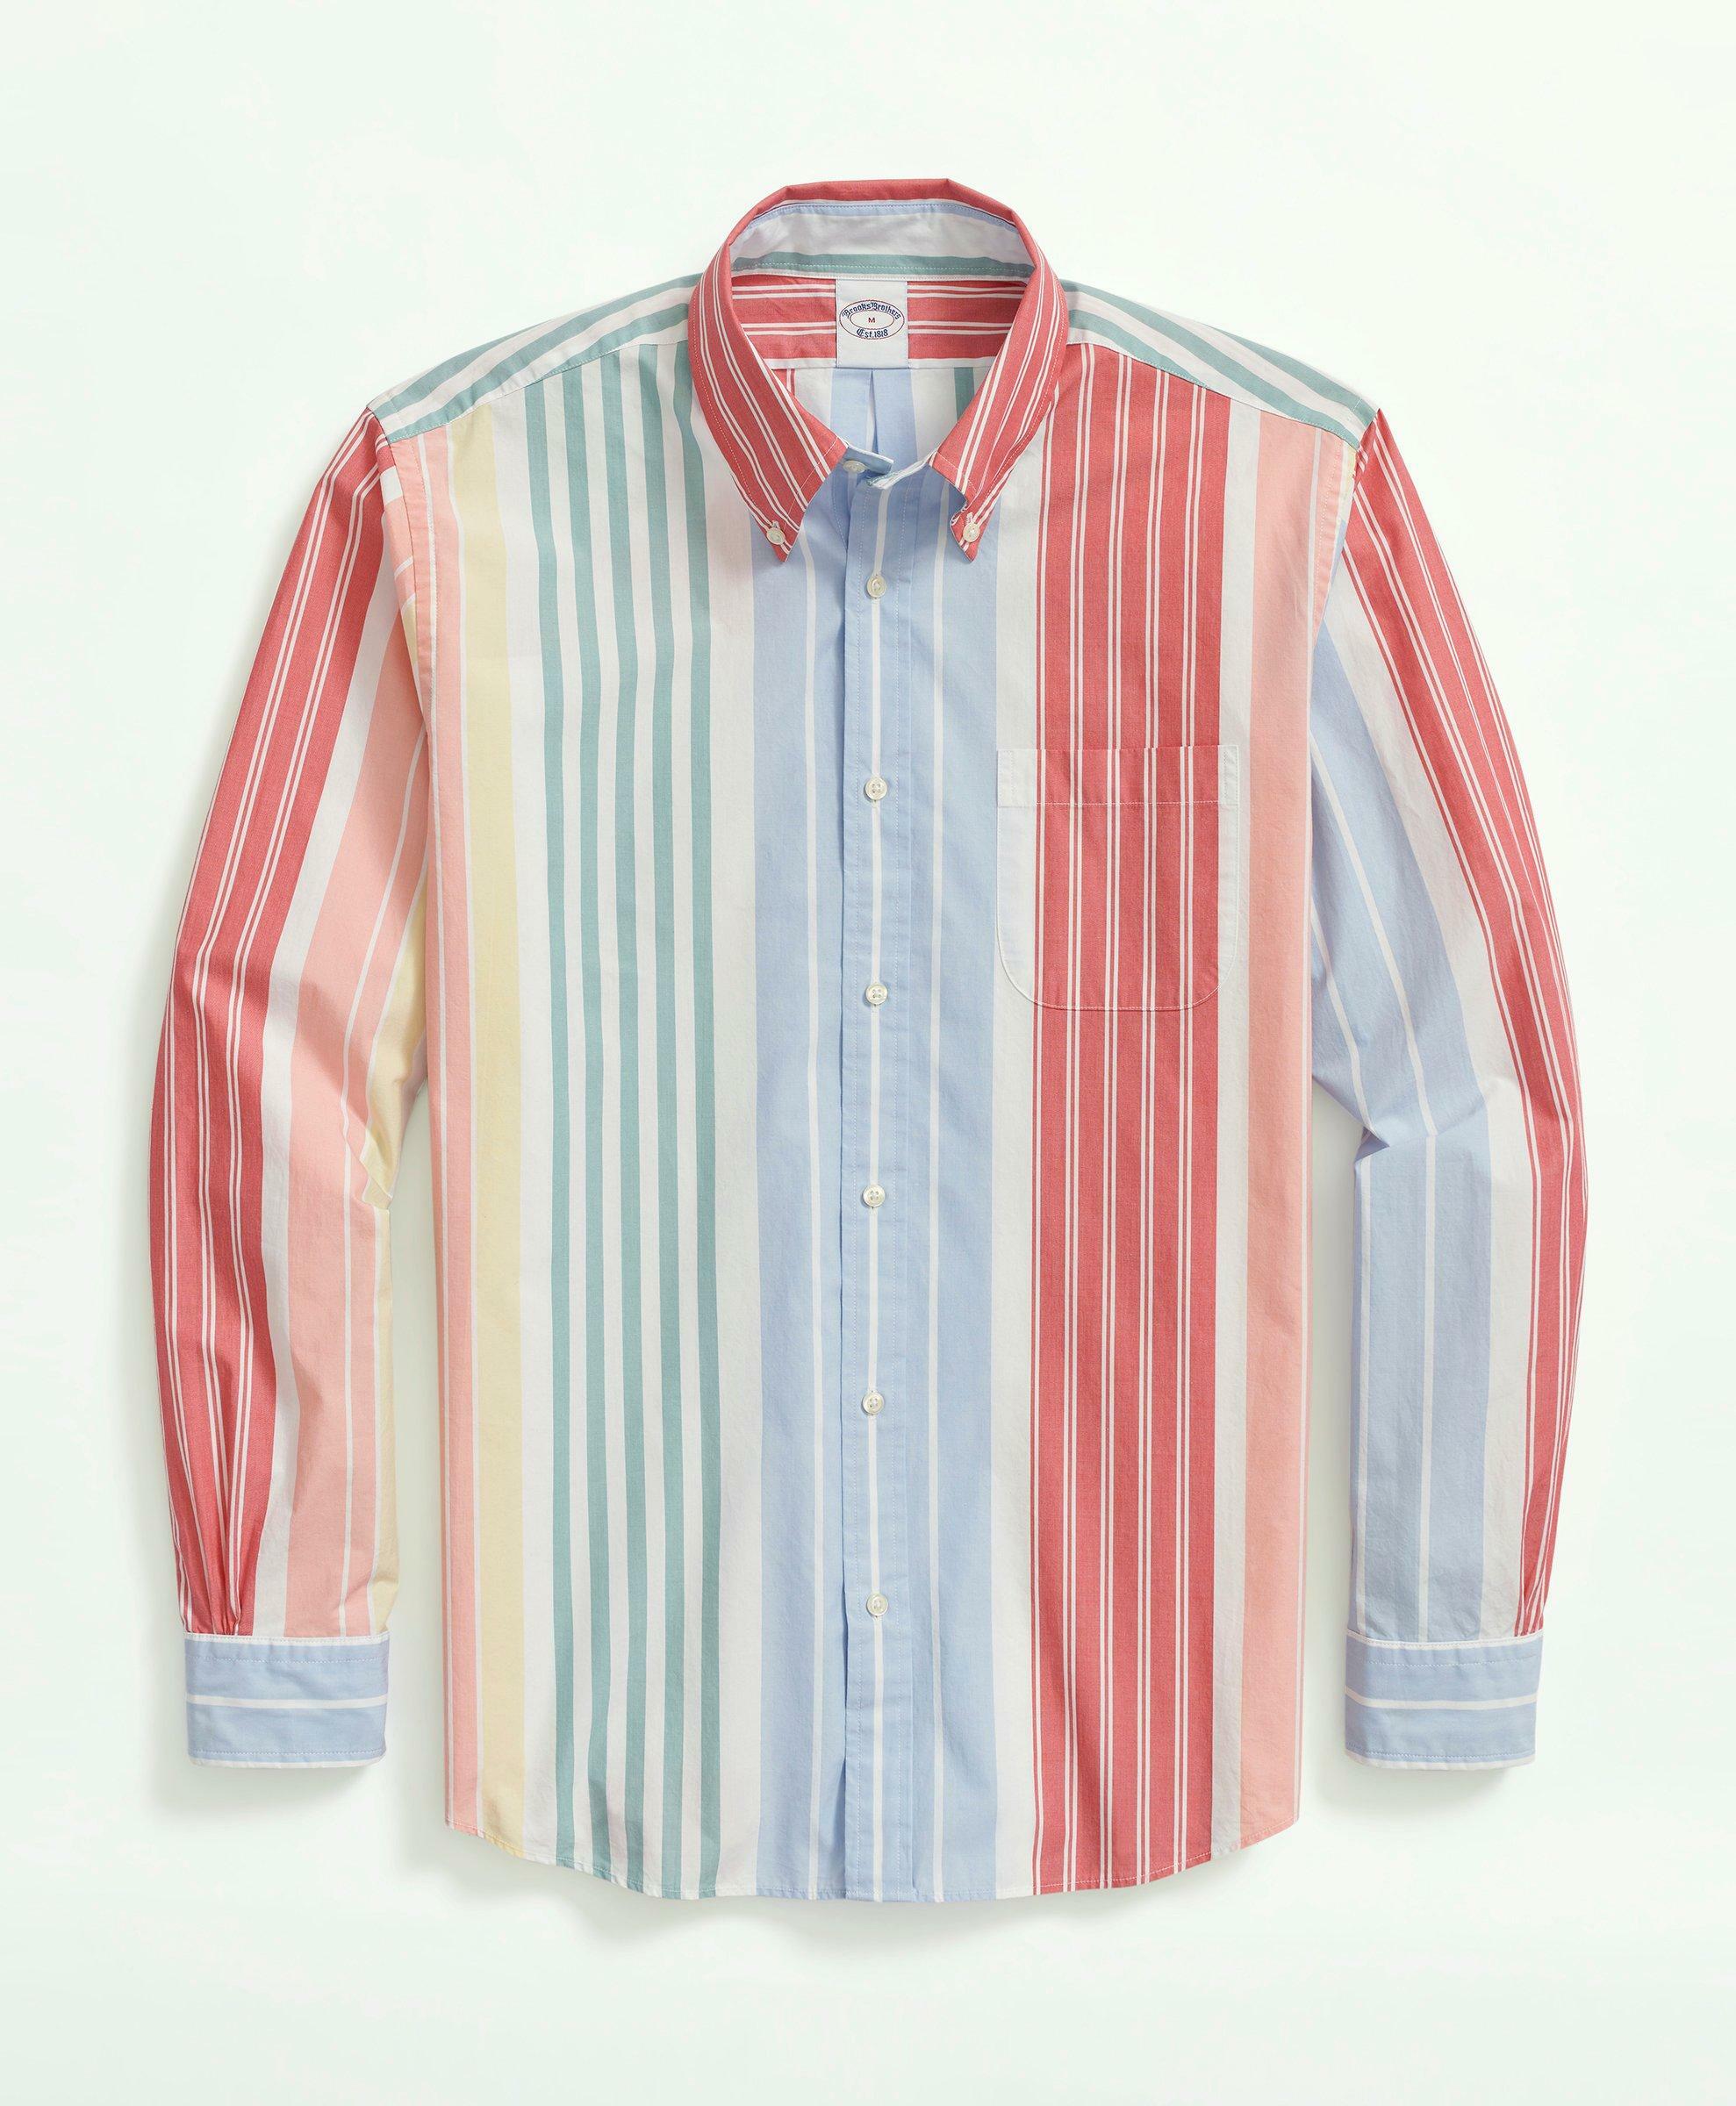 Brooks Brothers Men's Friday Shirt, Poplin Striped